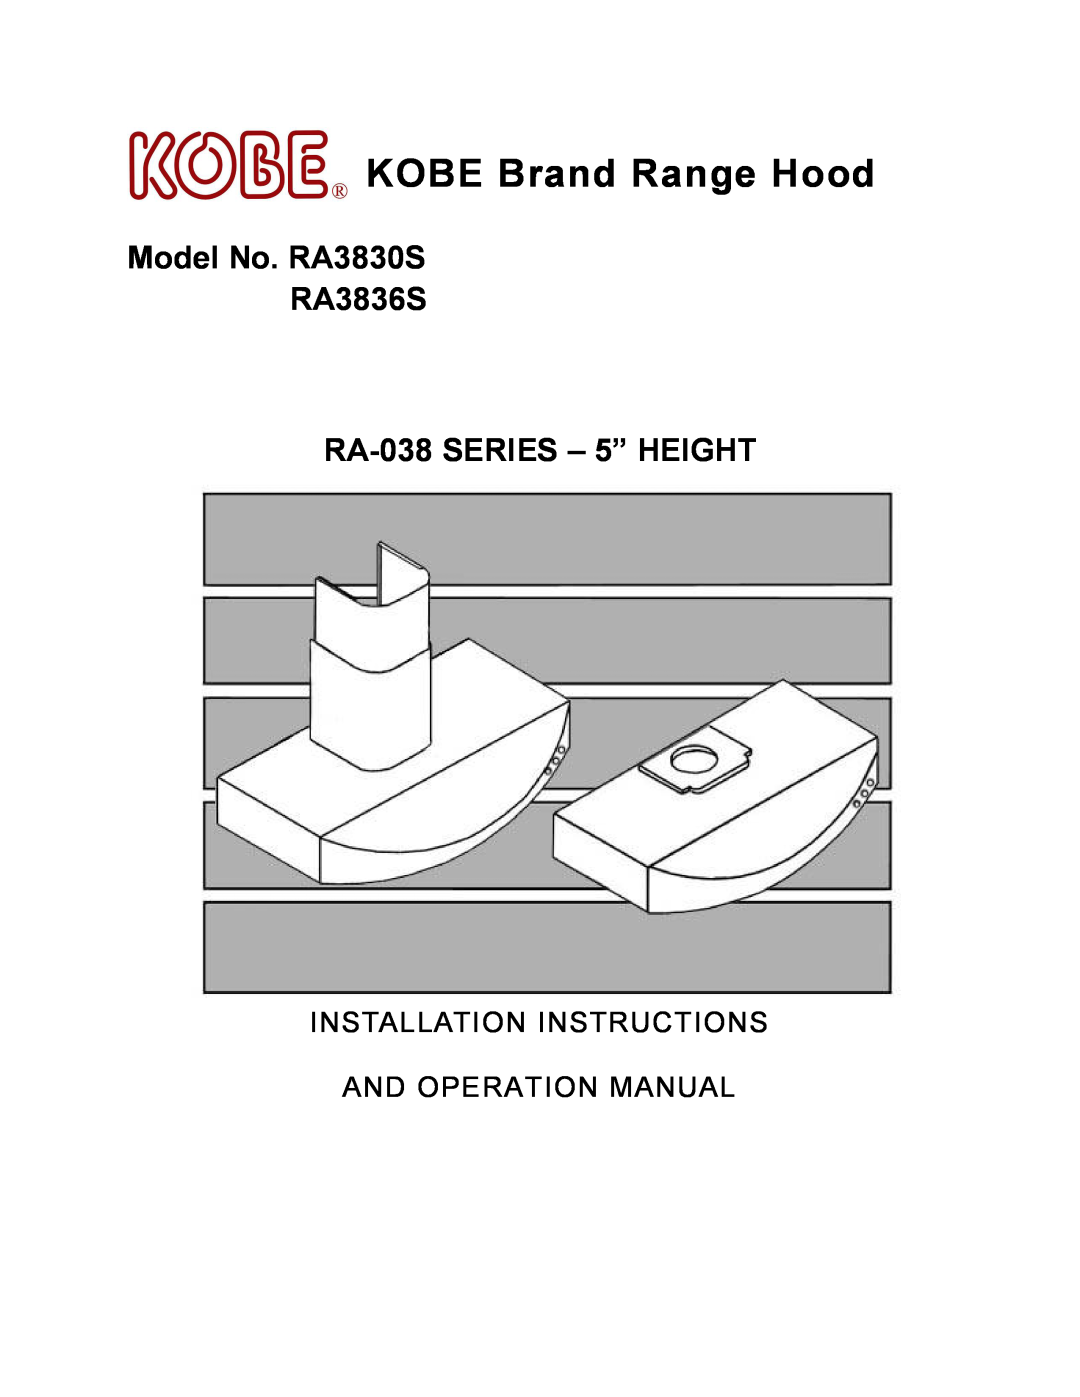 Kobe Range Hoods installation instructions KOBE Brand Range Hood, Model No. RA3830S RA3836S RA-038 SERIES 5 HEIGHT 